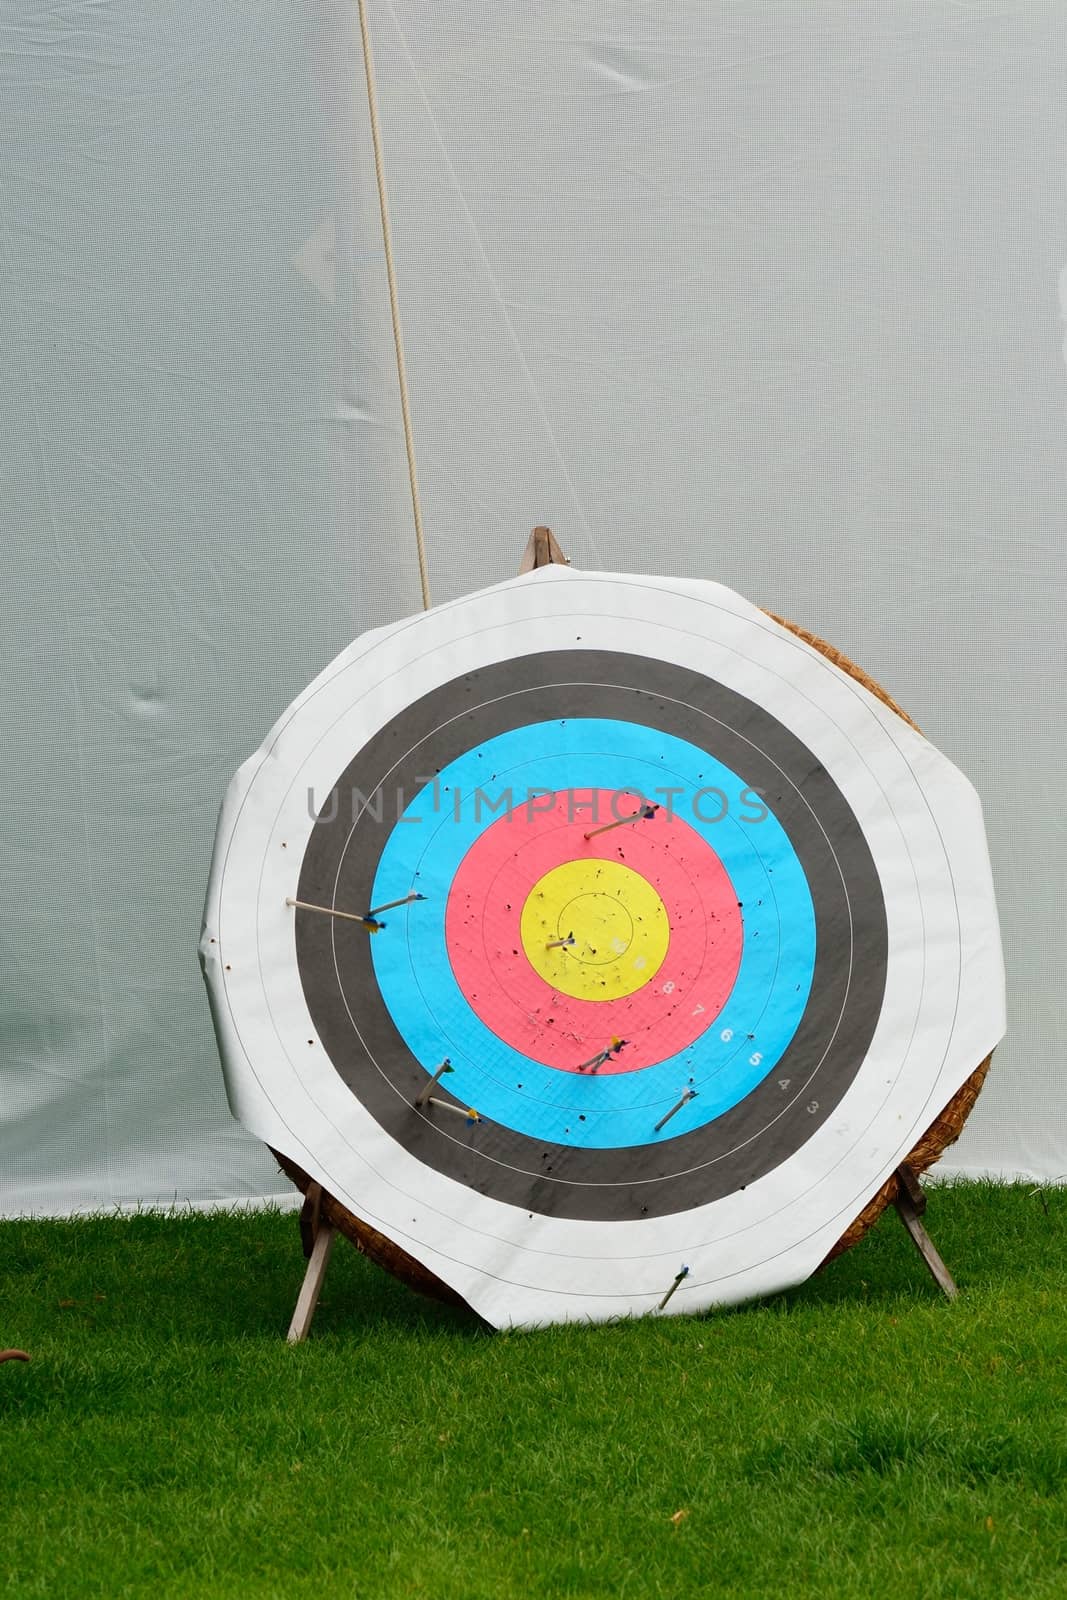 Archery target by pauws99